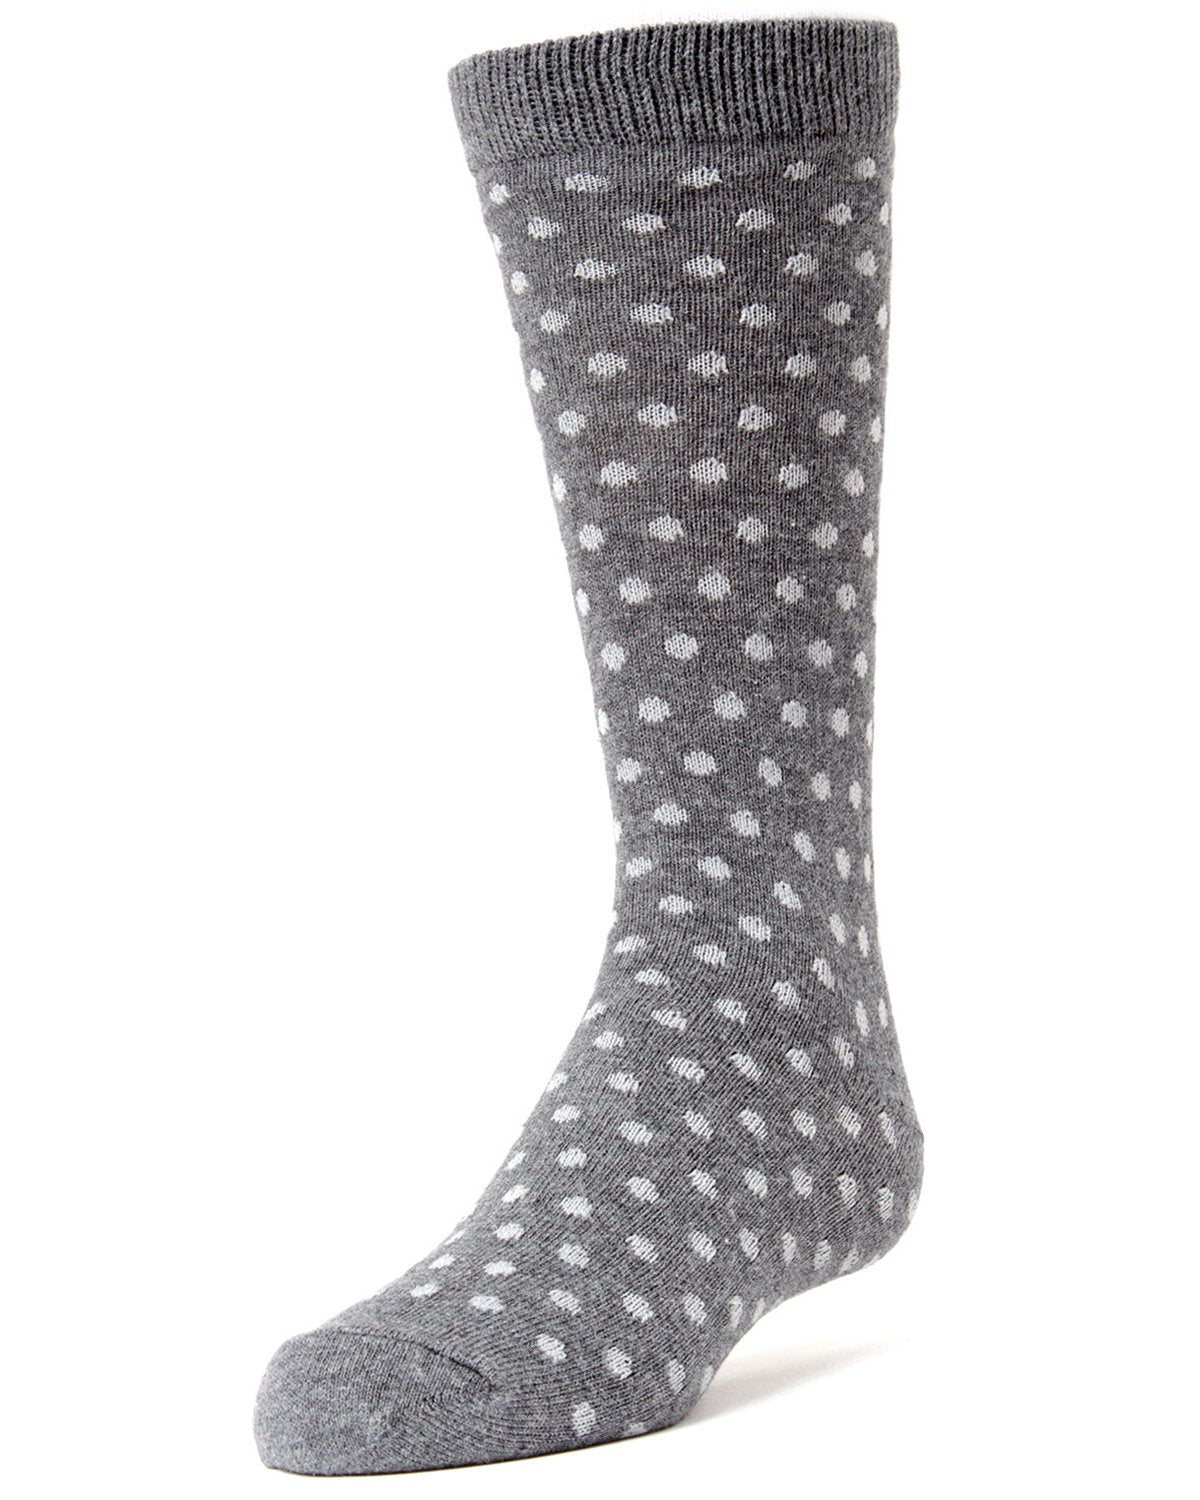 MeMoi Polka Dot Cotton Blend Dress Socks - Boys - Male - image 2 of 4